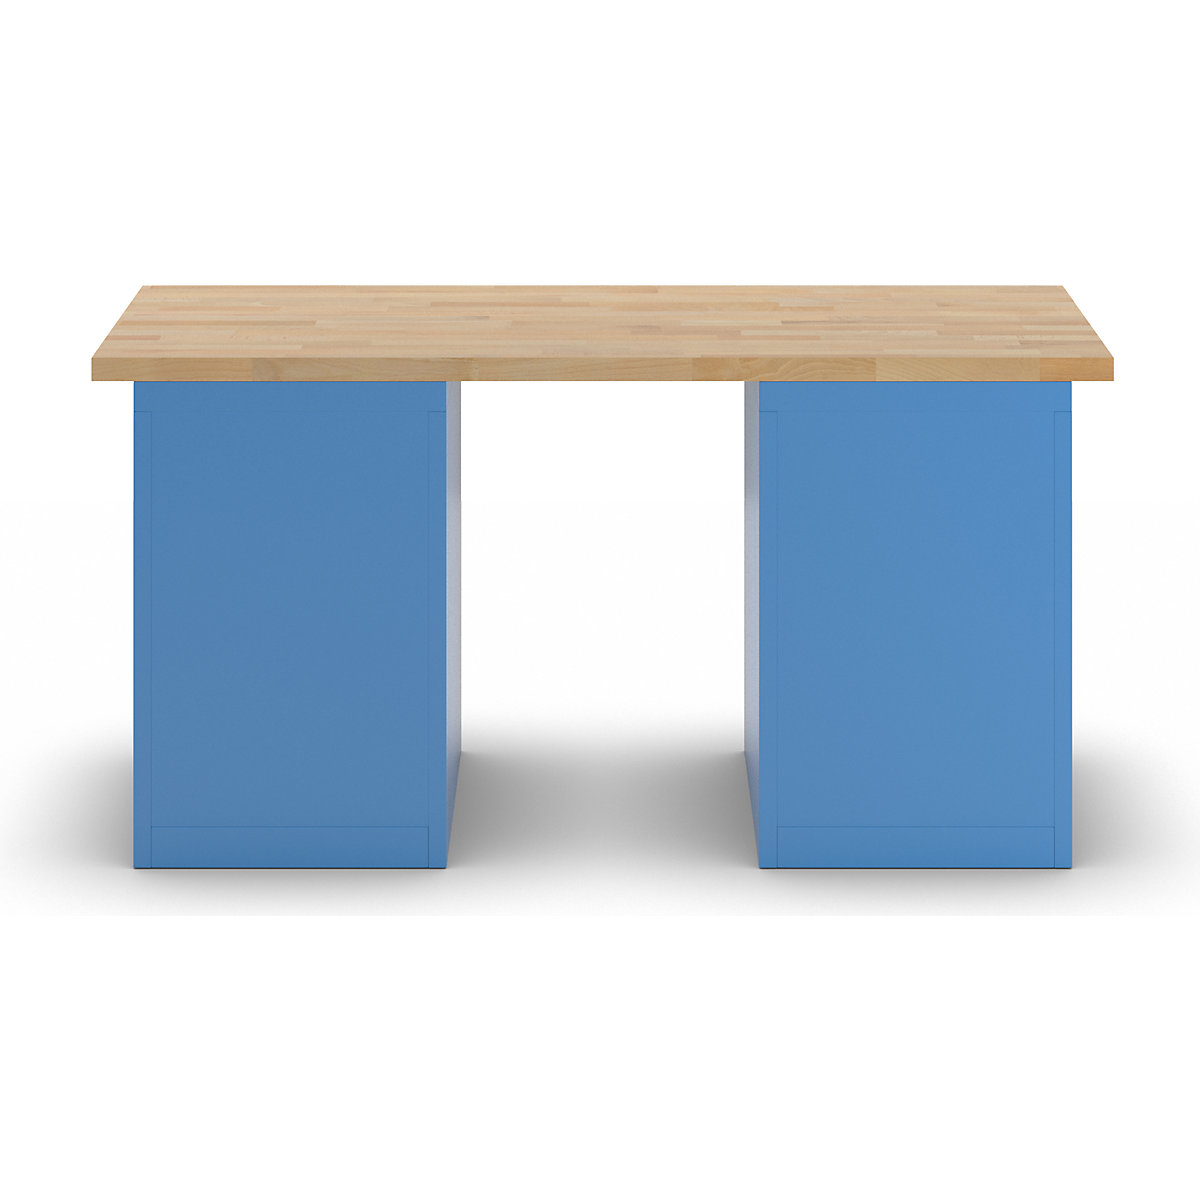 Dílenský stůl, stavebnicový systém